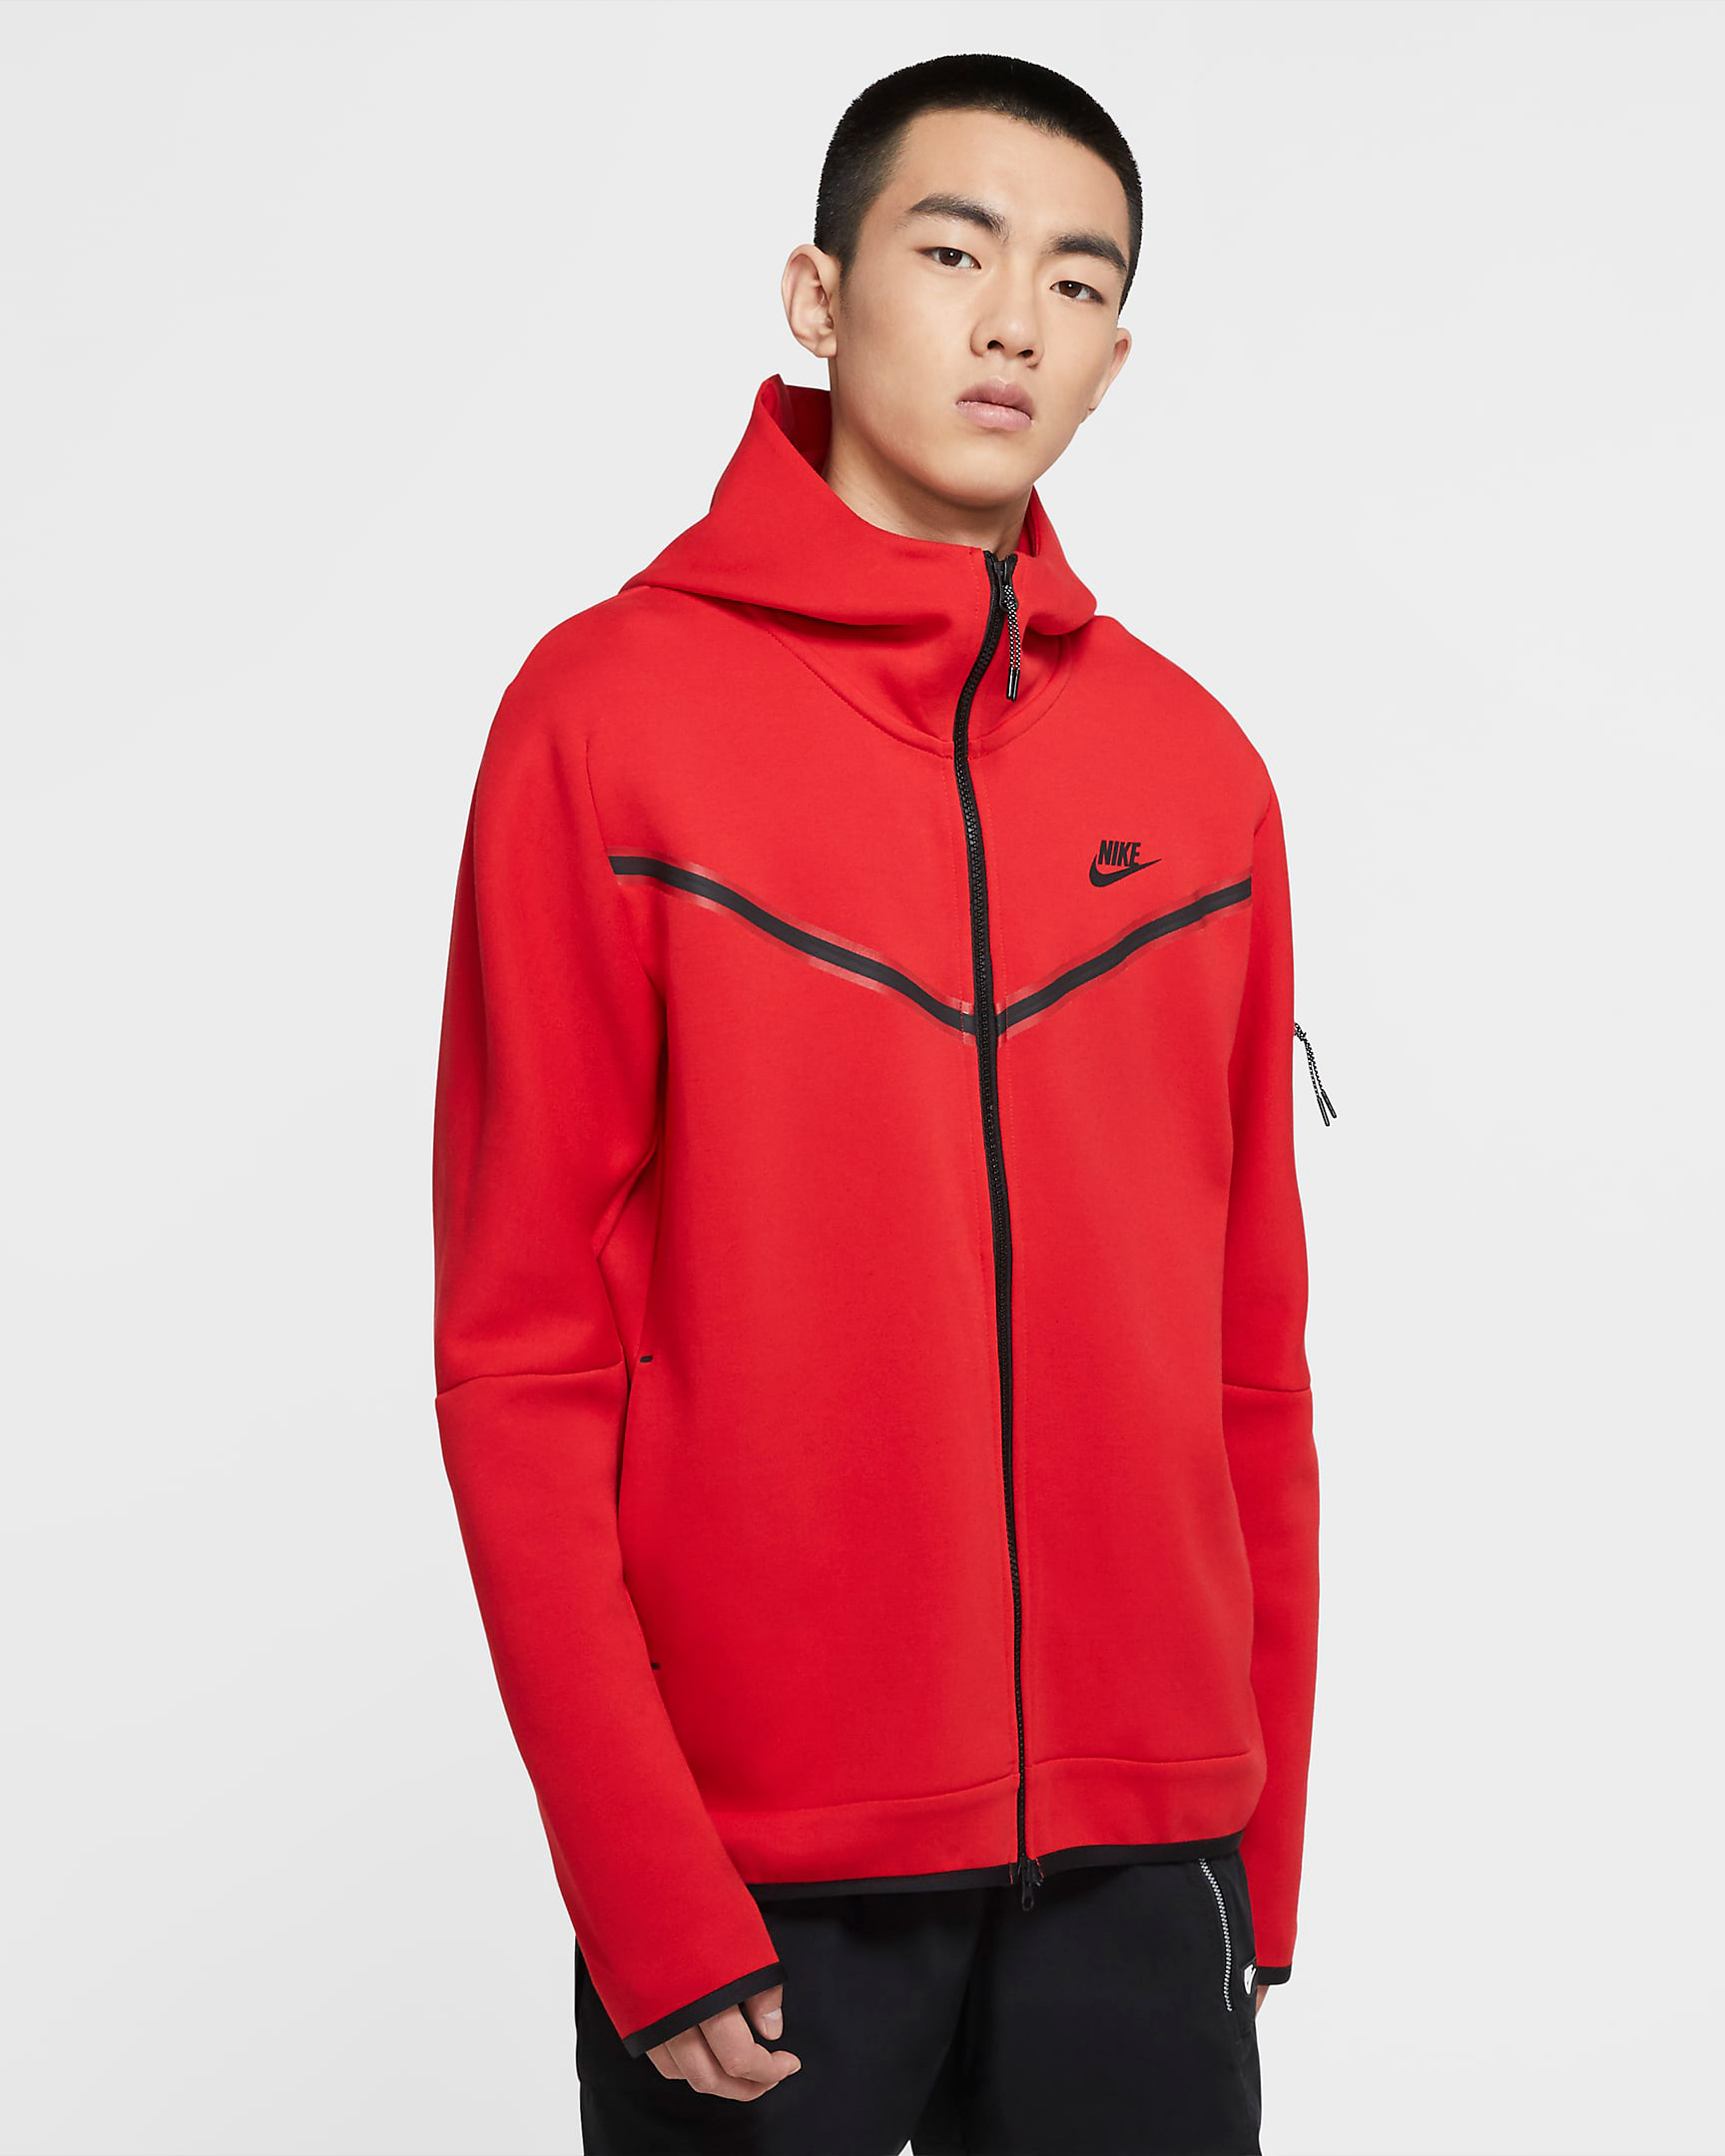 nike-tech-fleece-zip-hoodie-red-black